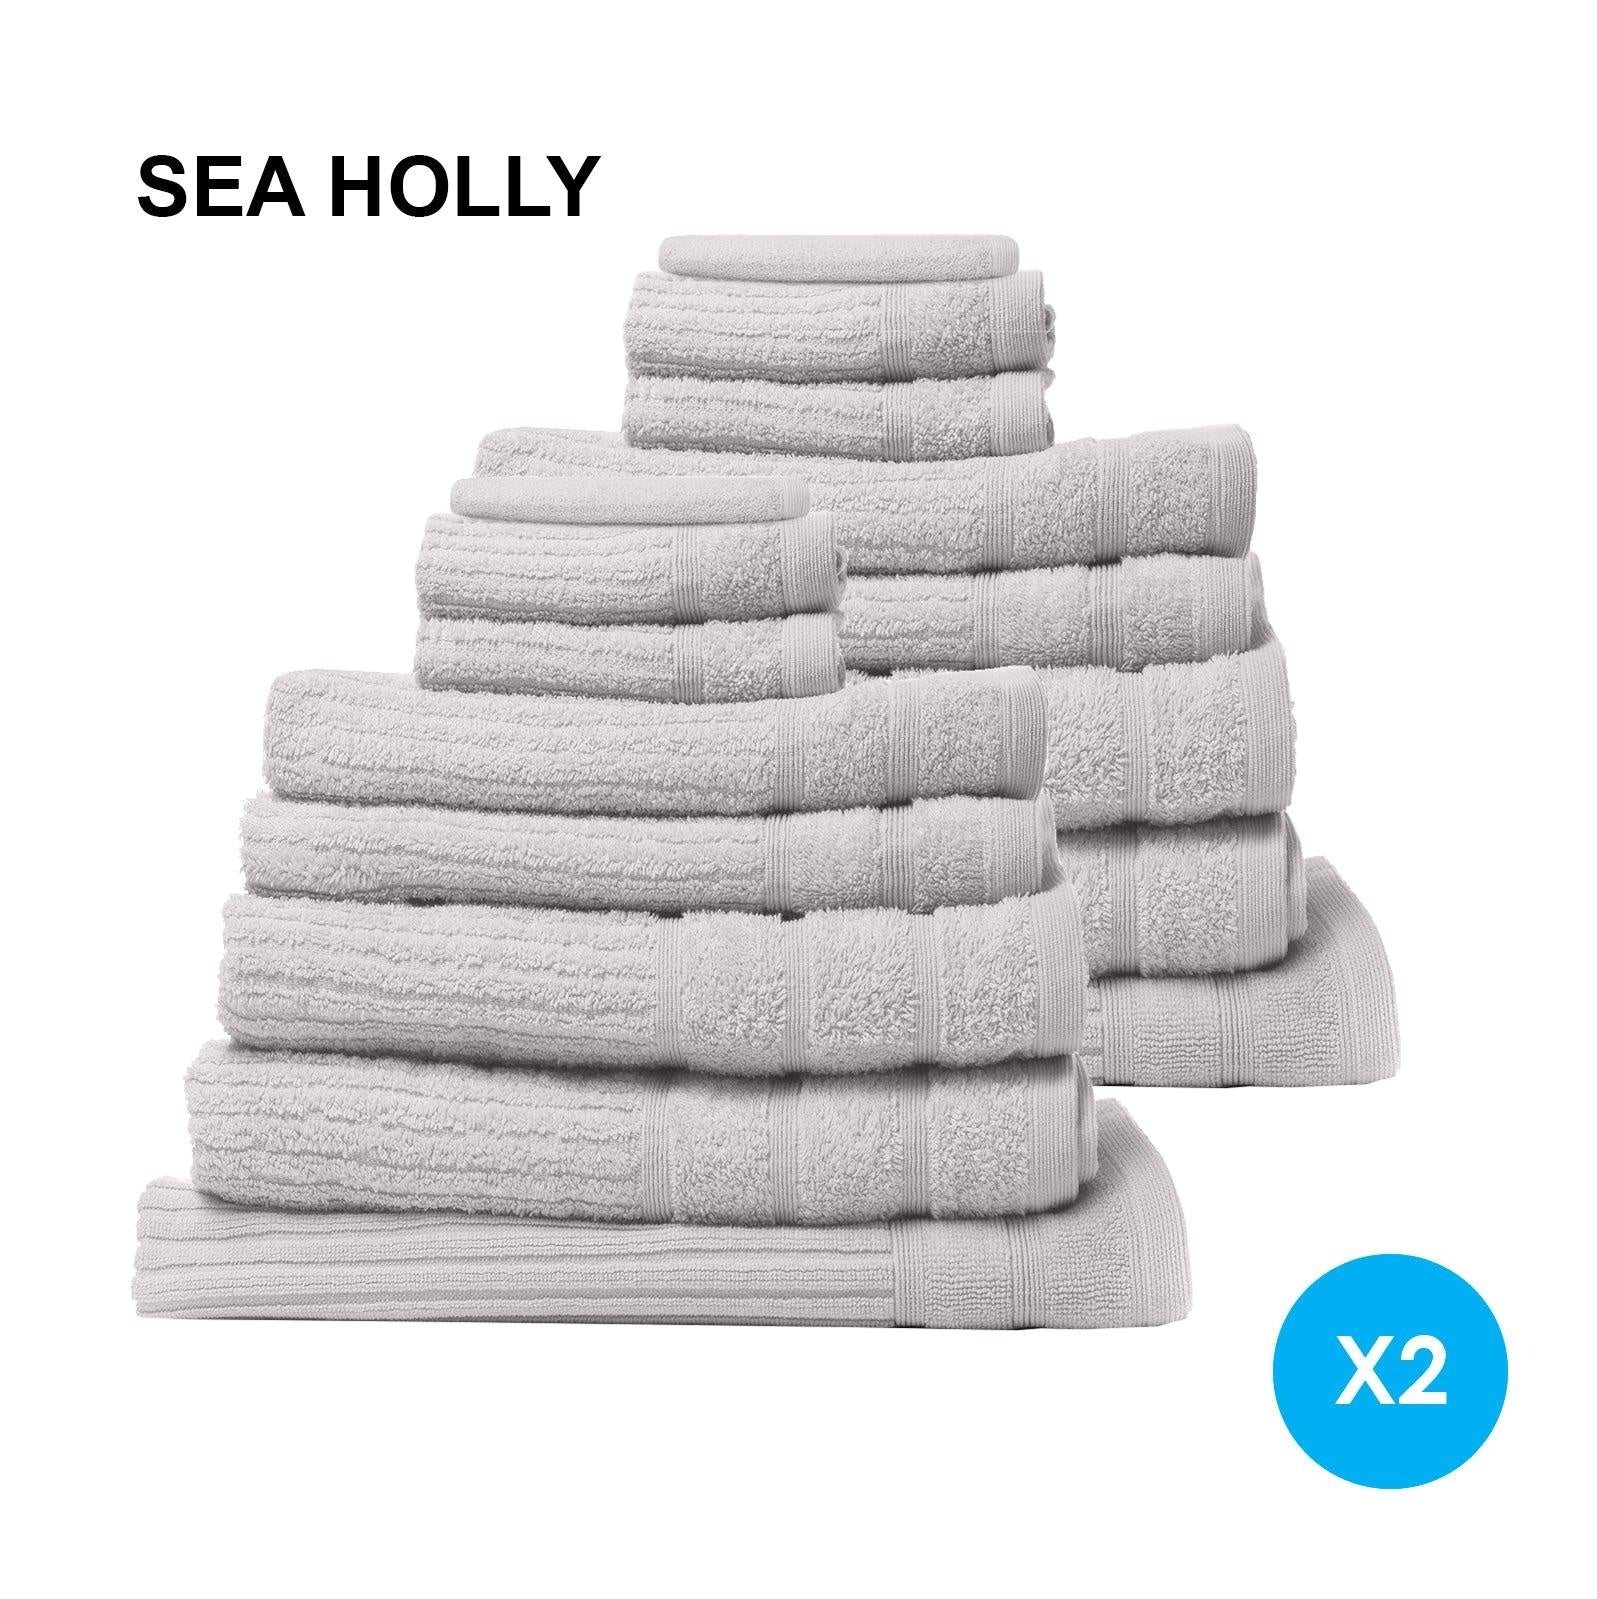 Royal Comfort 16 Piece Egyptian Cotton Eden Towel Set 600GSM Luxurious Absorbent Sea Holly Deals499